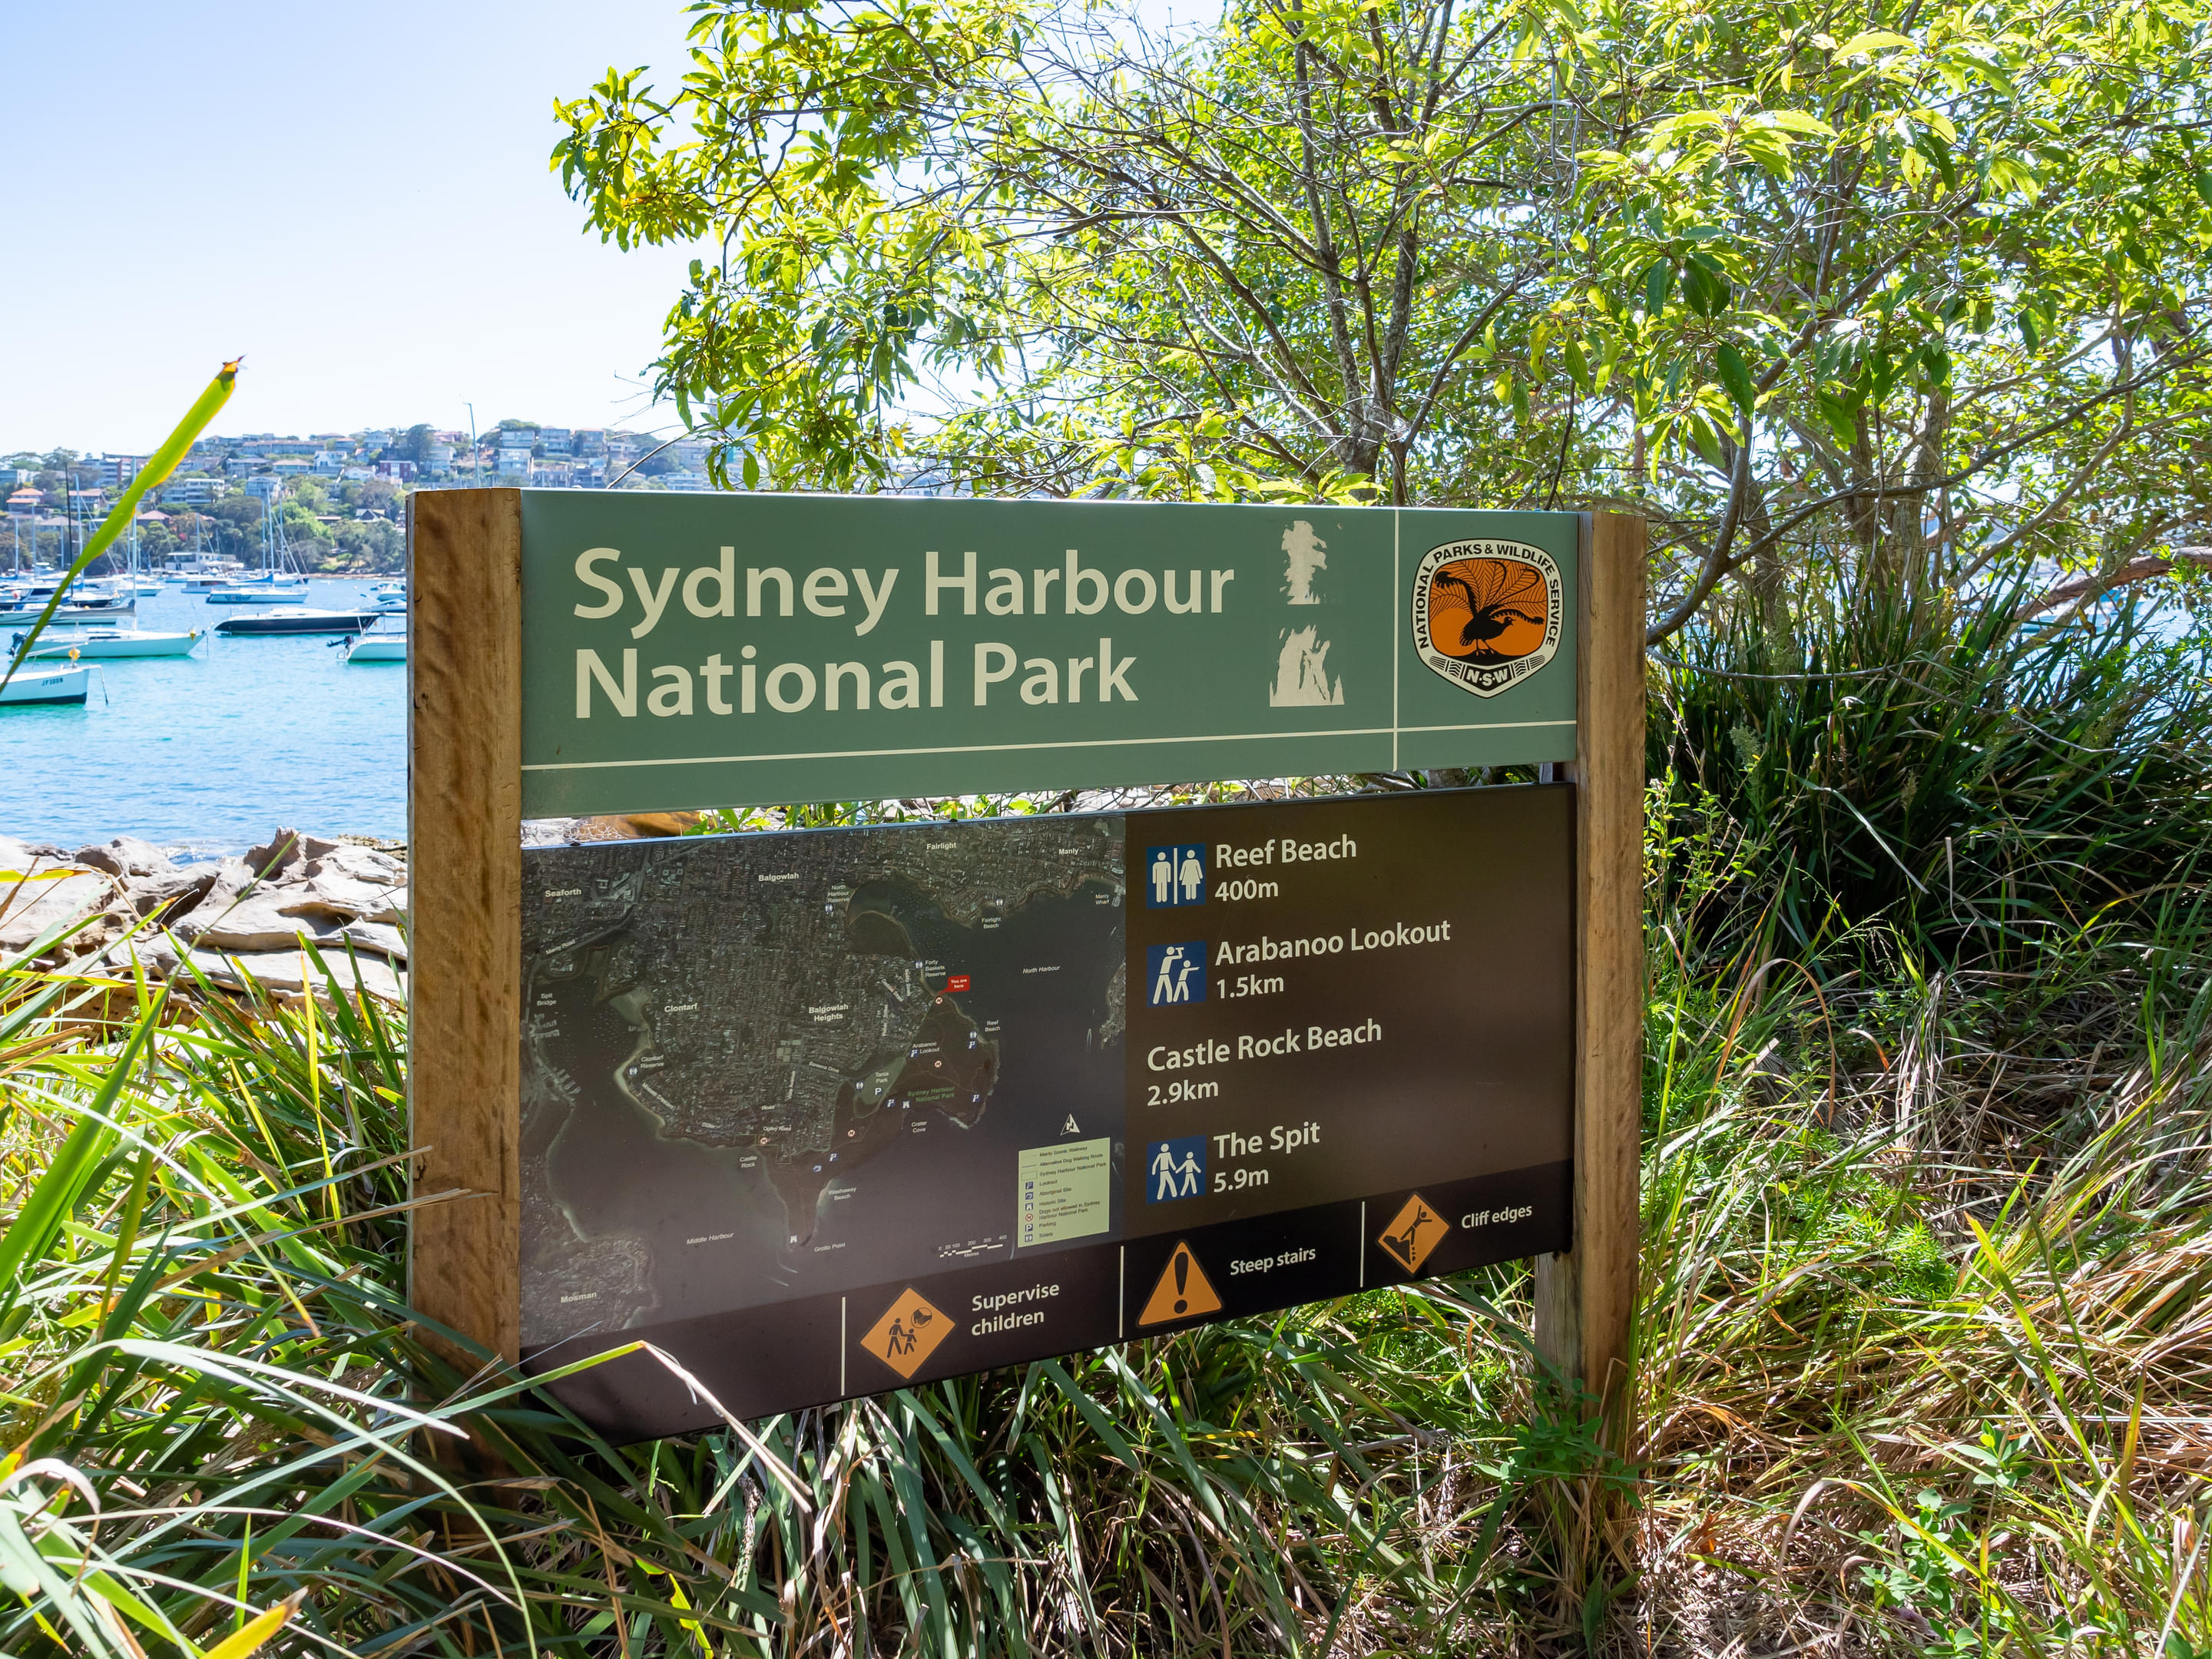 Sydney Harbor National Park Overview